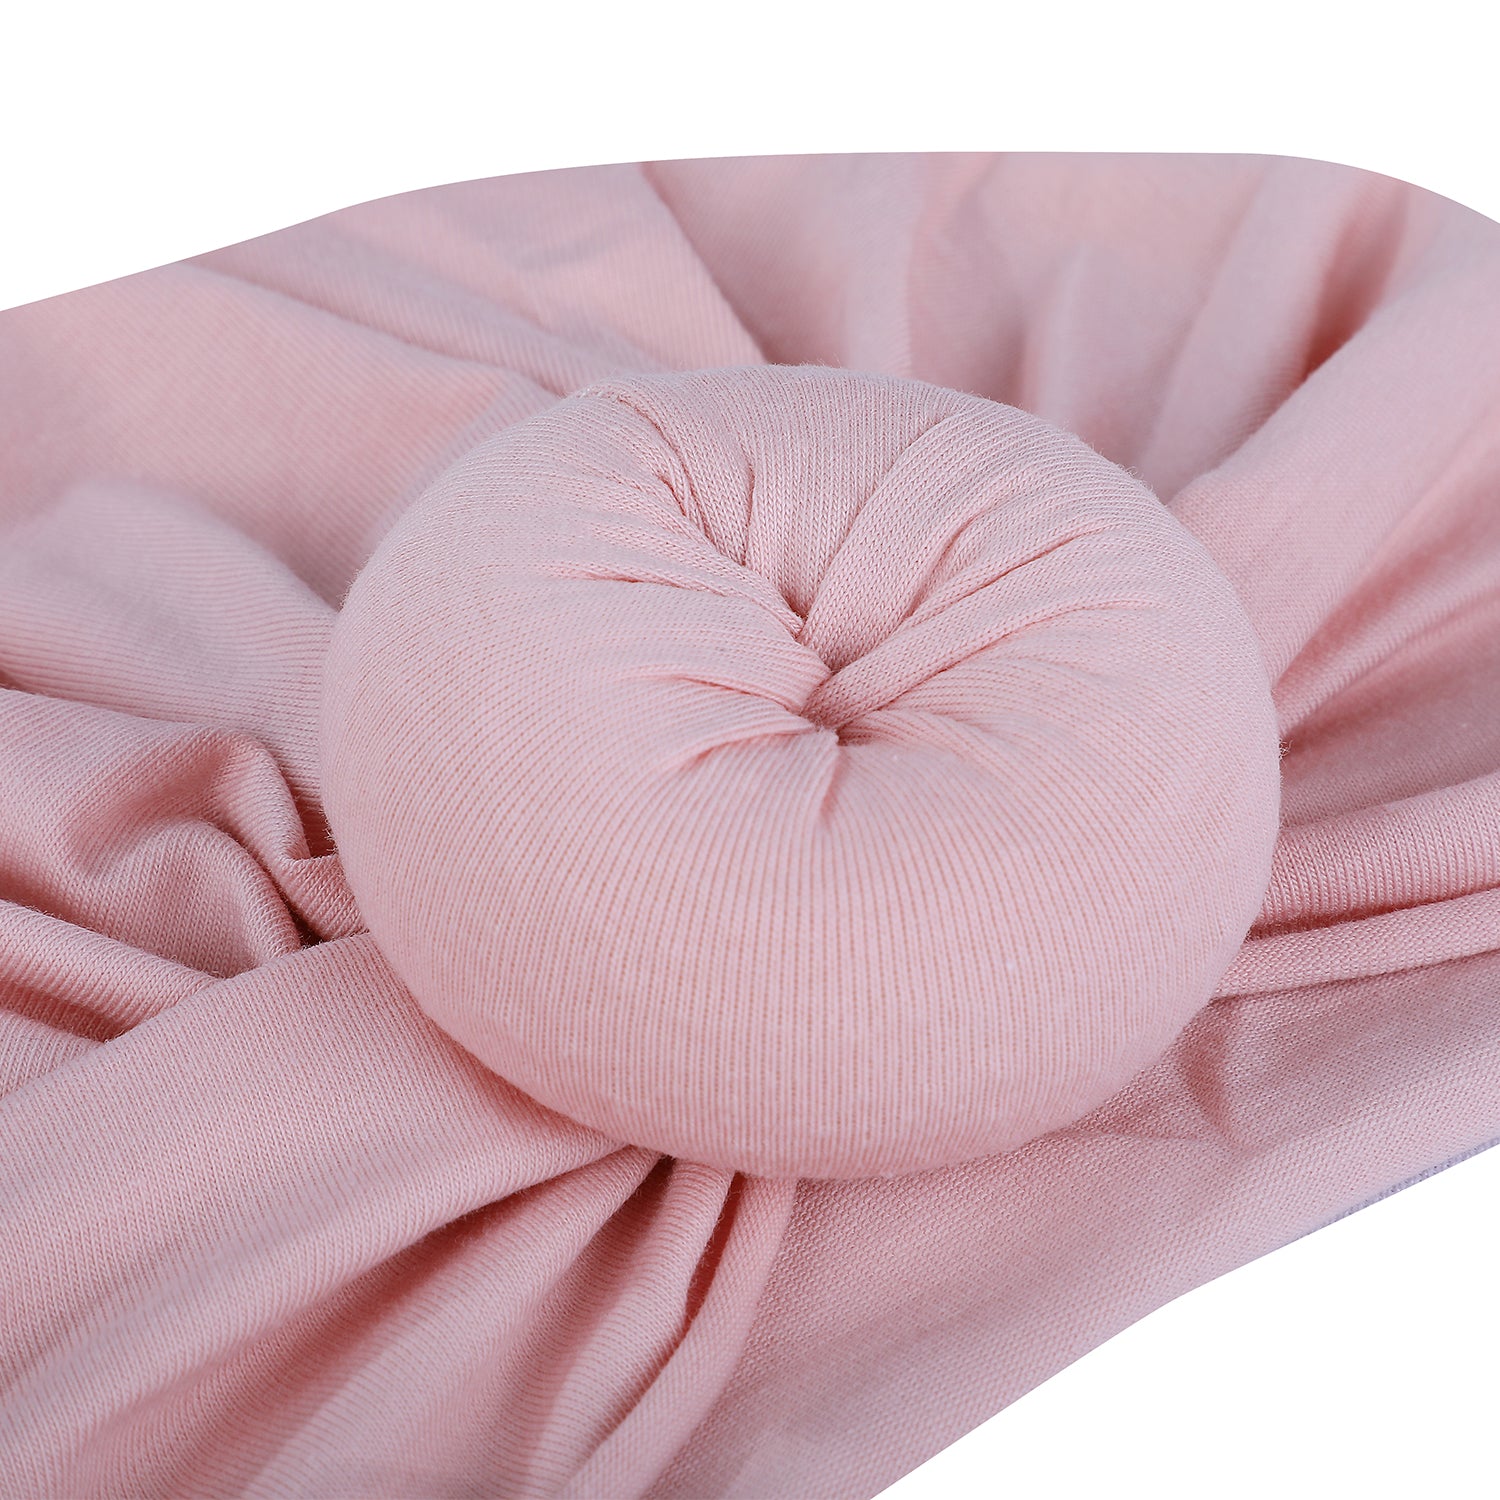 Baby Moo 3D Knot Turban Cap And Matching Floral Socks Set - Pink - Baby Moo